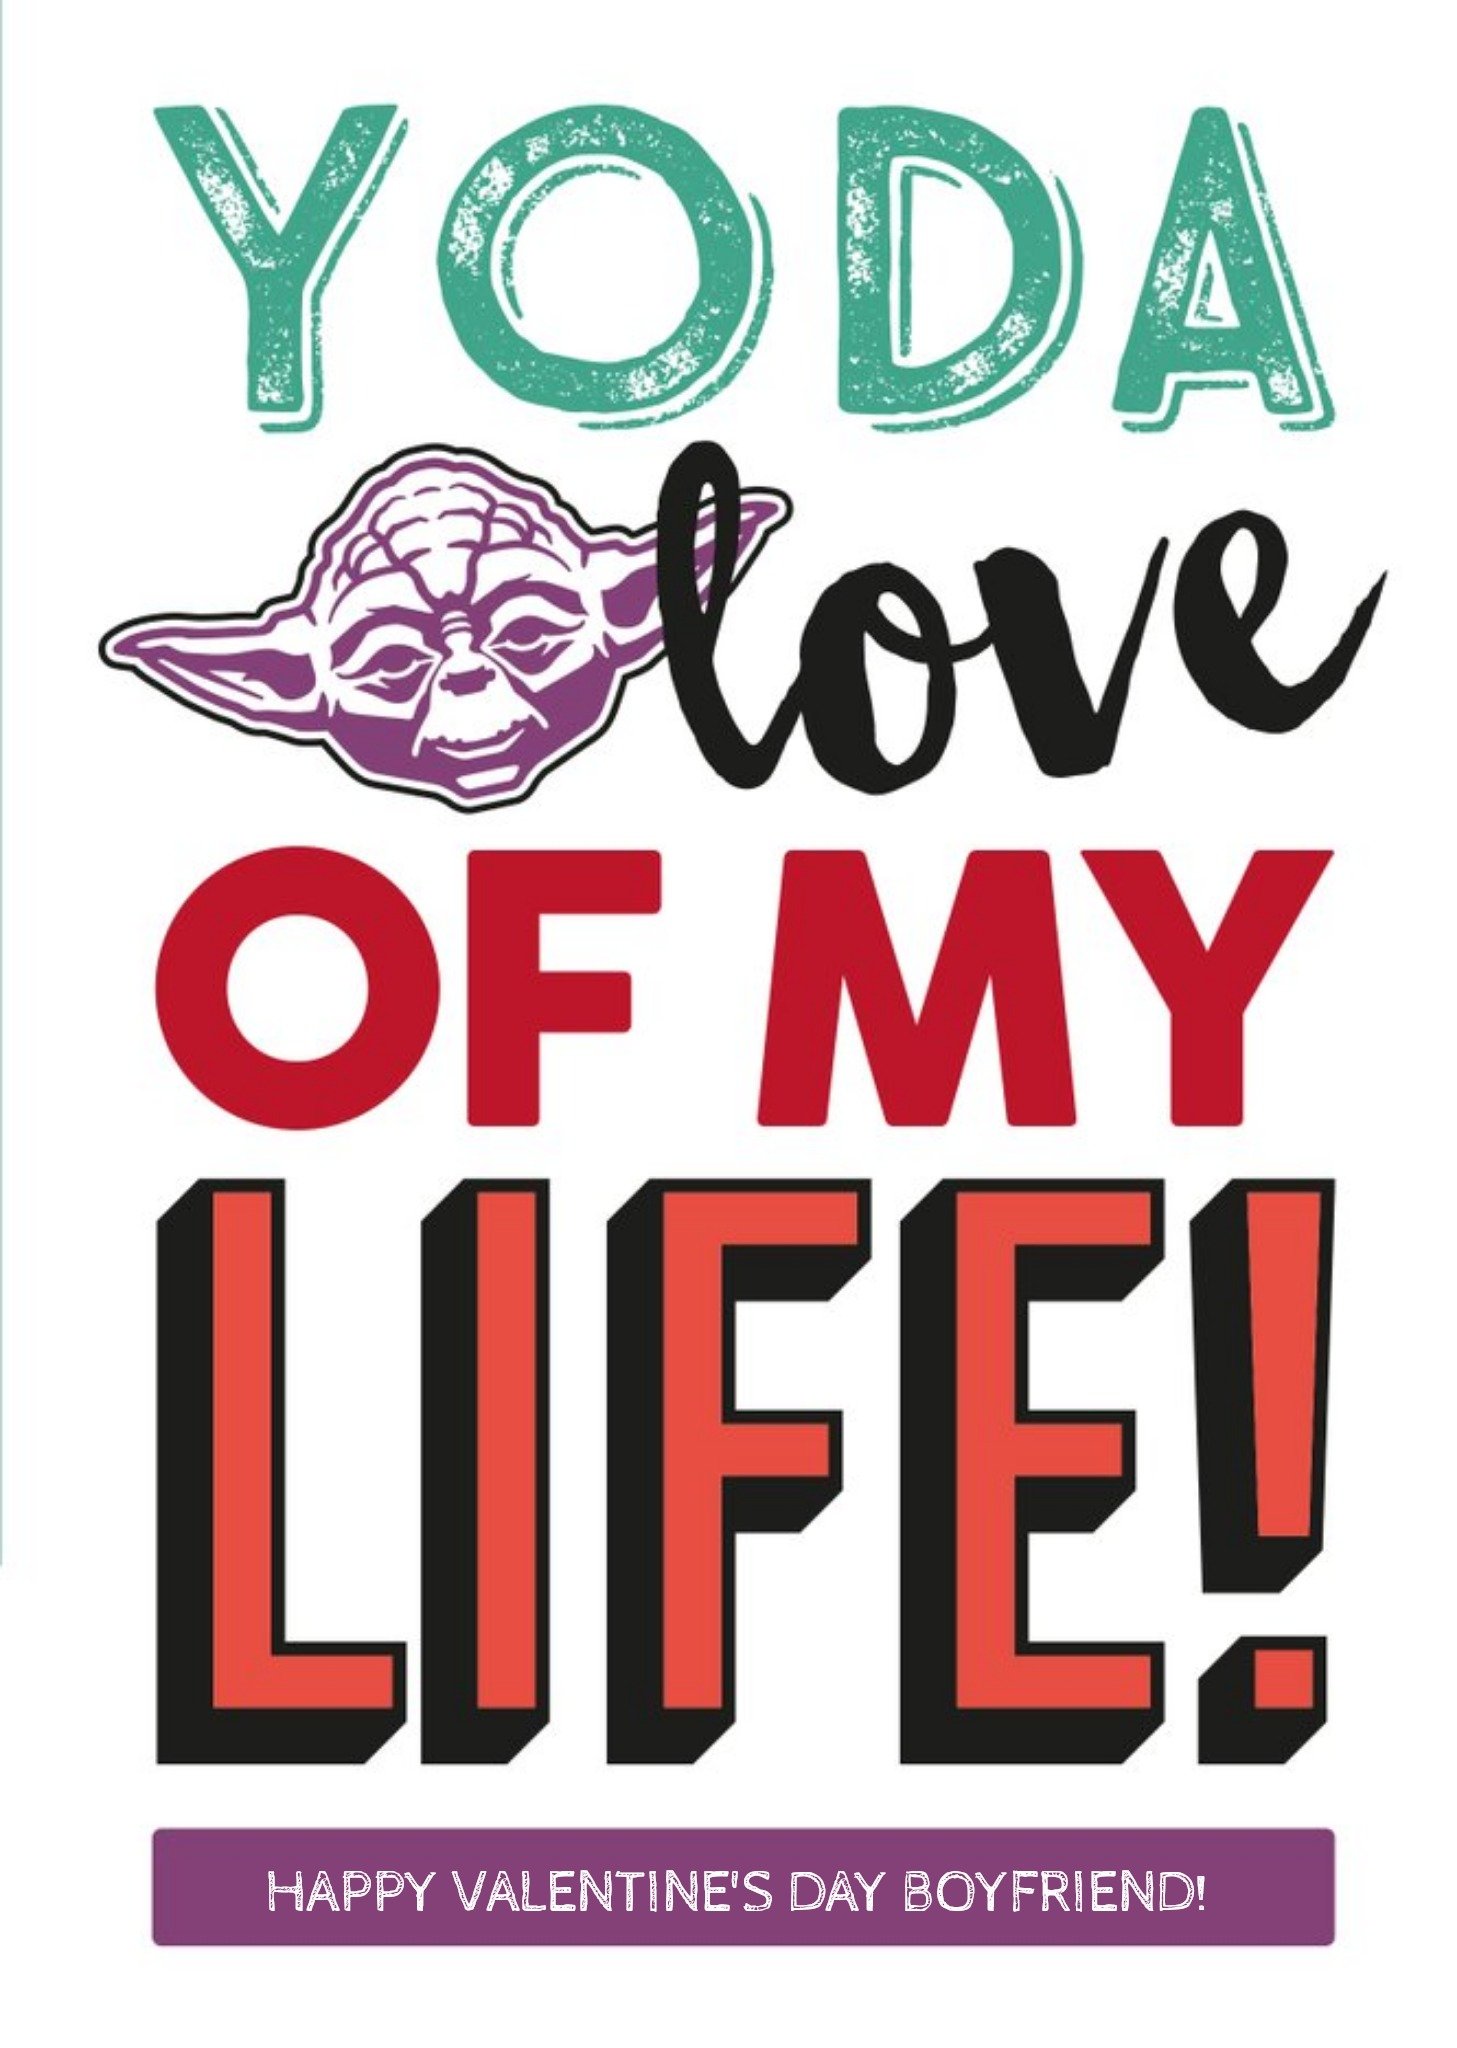 Disney Star Wars Yoda Love Of My Life Valentine's Day Boyfriend Card, Large